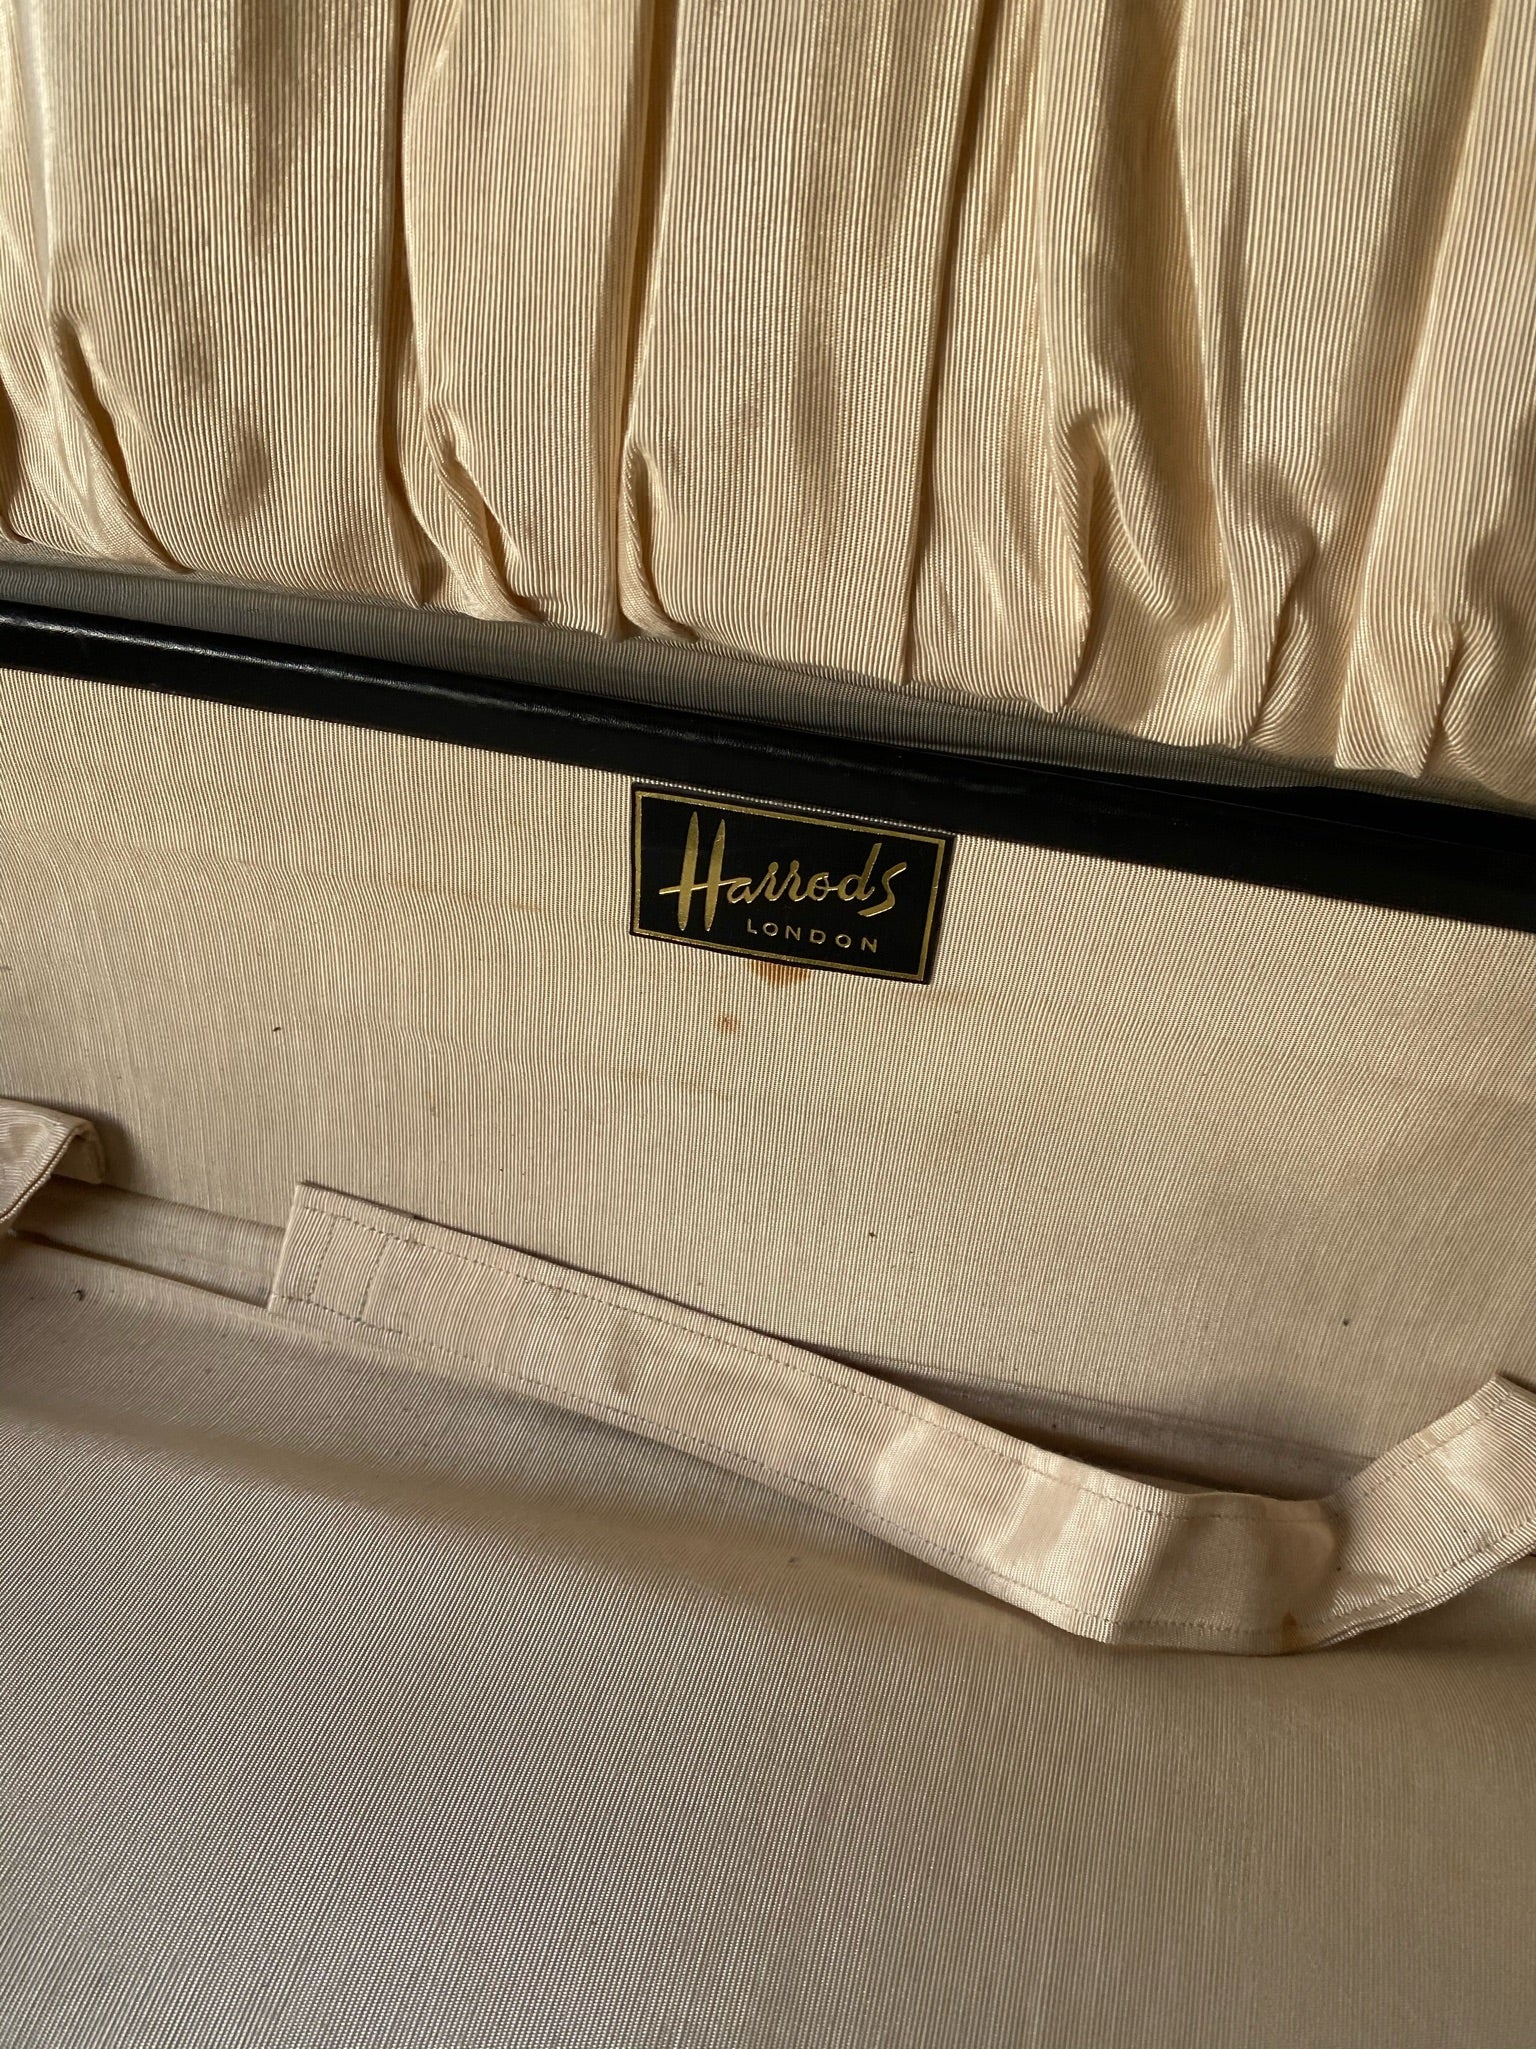 Vintage Medium Harrods Leather Suitcase